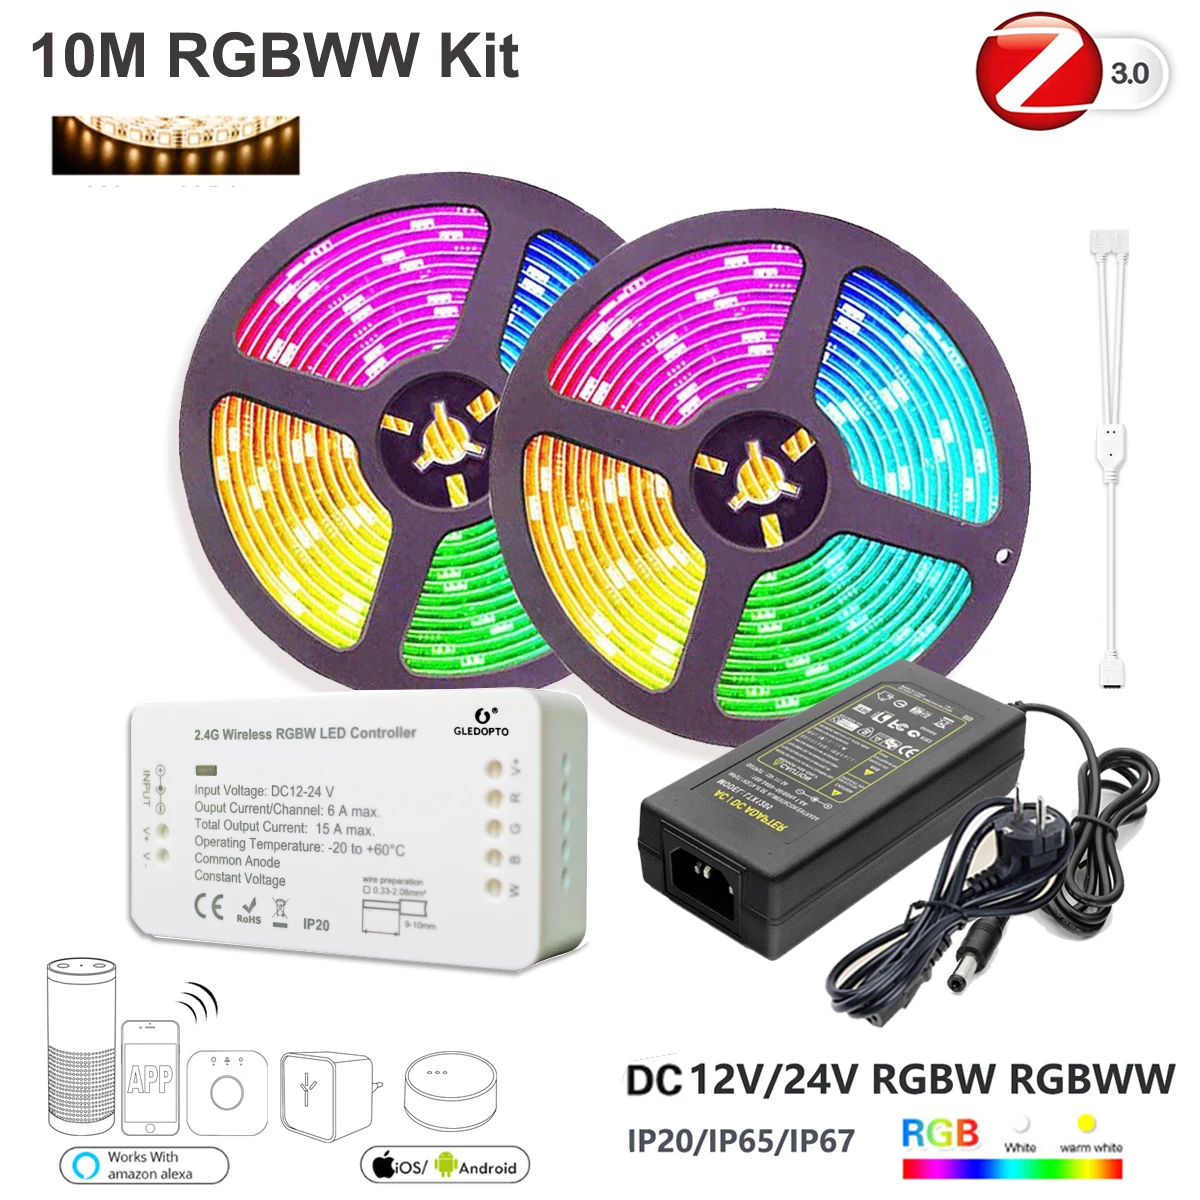 ZigBee ZLL RGBW контроллер+ 5 м/10 м 12 В/24 В RGBW RGBWW 4в1 5050 60 светодиодный s светодиодный блок питания совместимый с Alexa Echo - Испускаемый цвет: 10M RGBWW Kit